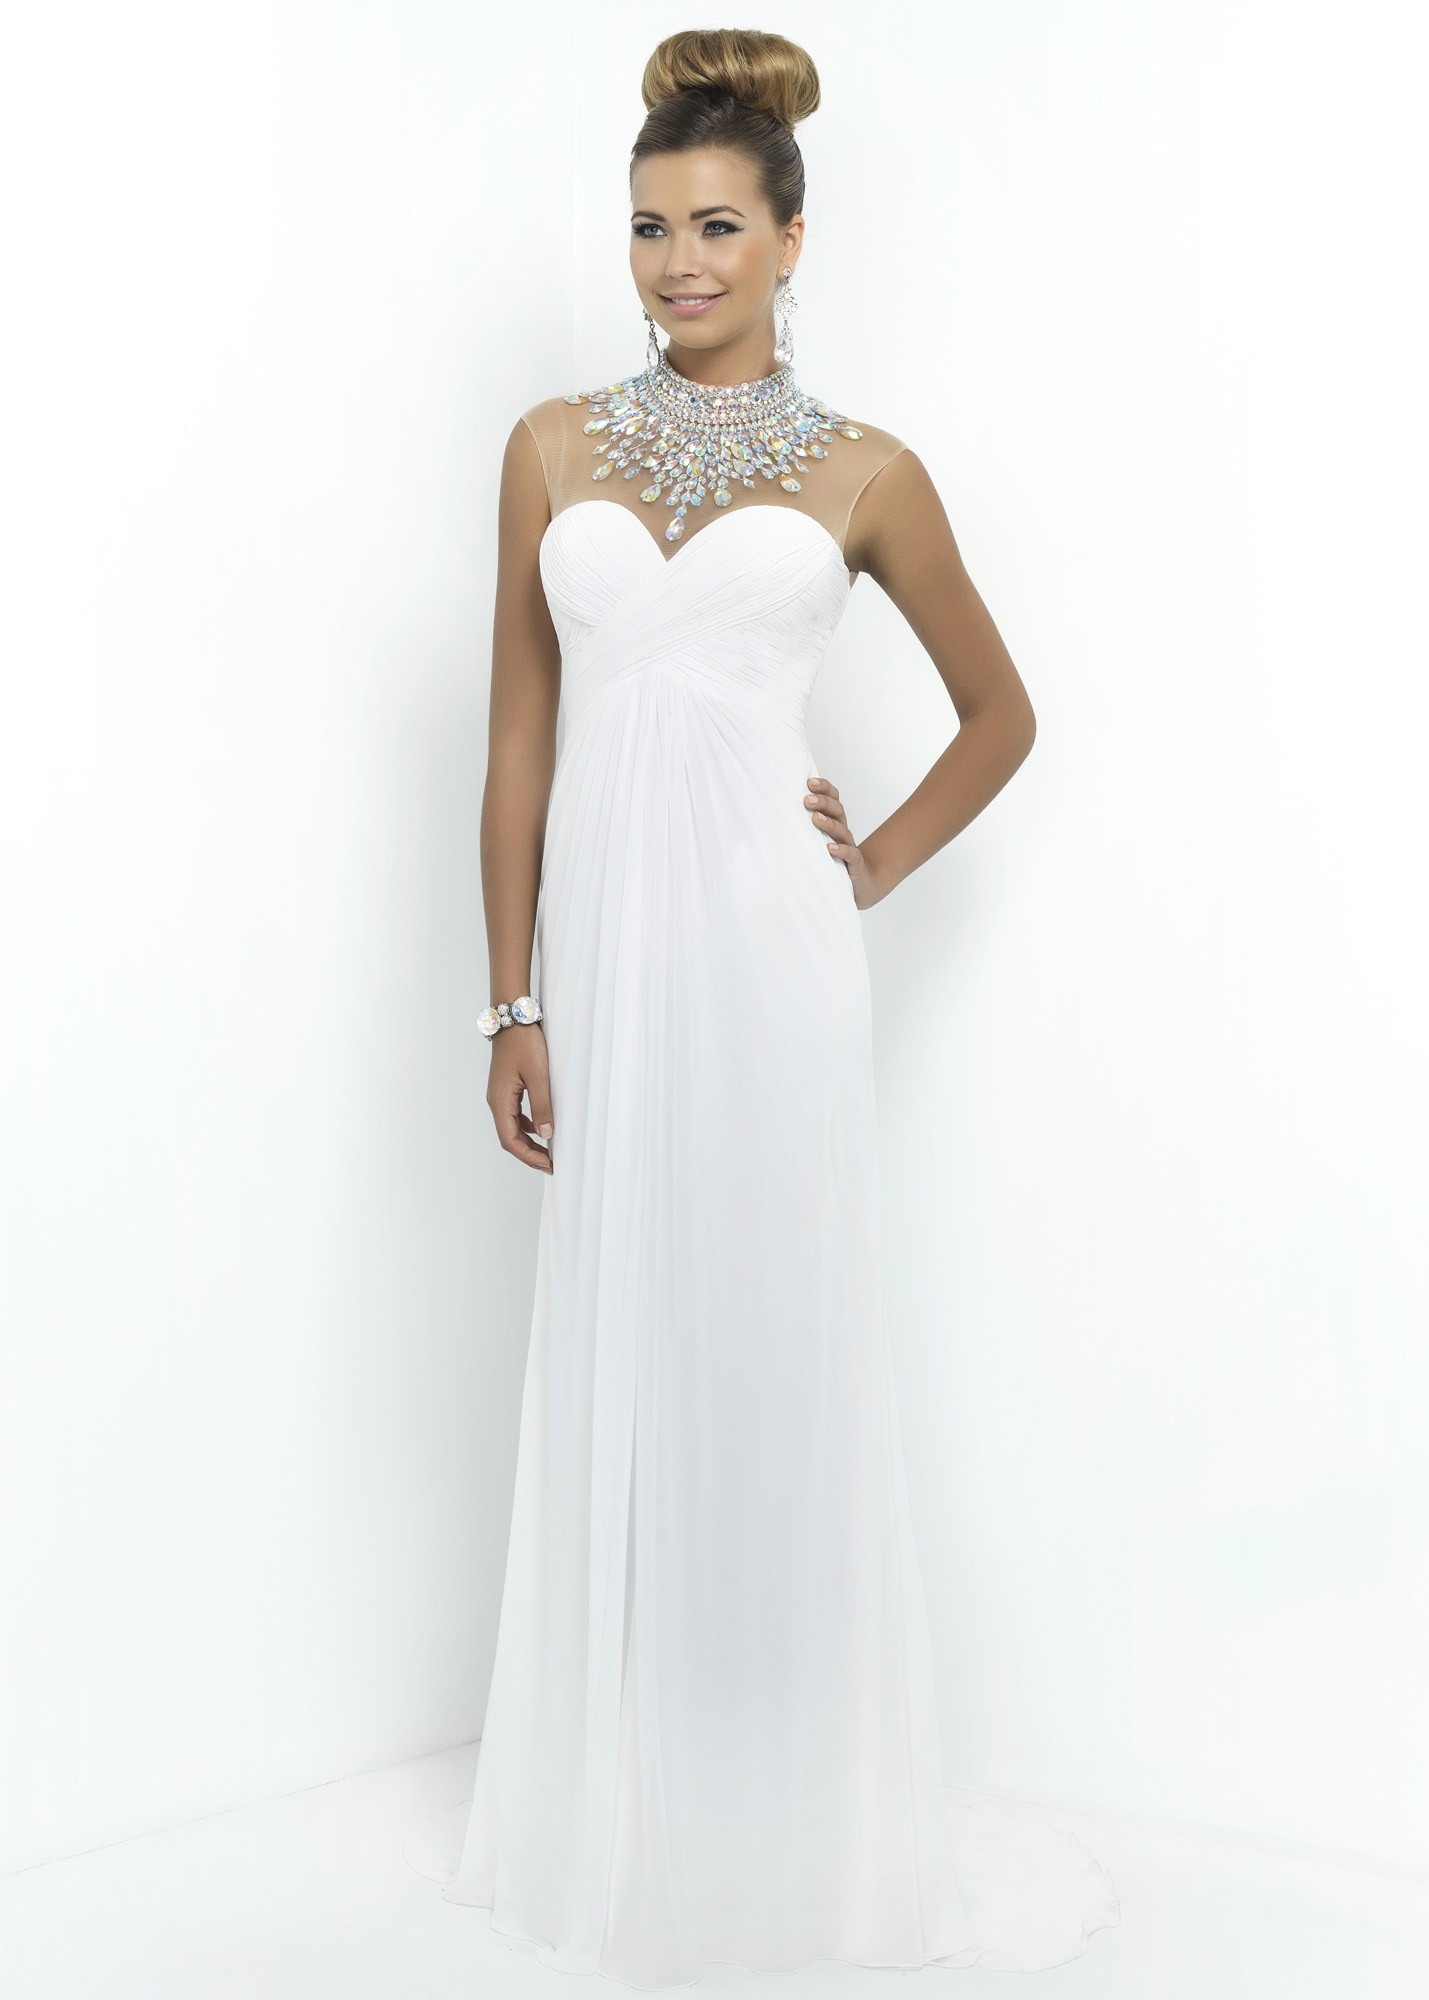 Blush 9952 - White Beaded Illusion Chiffon Prom Dress - RissyRoos.com